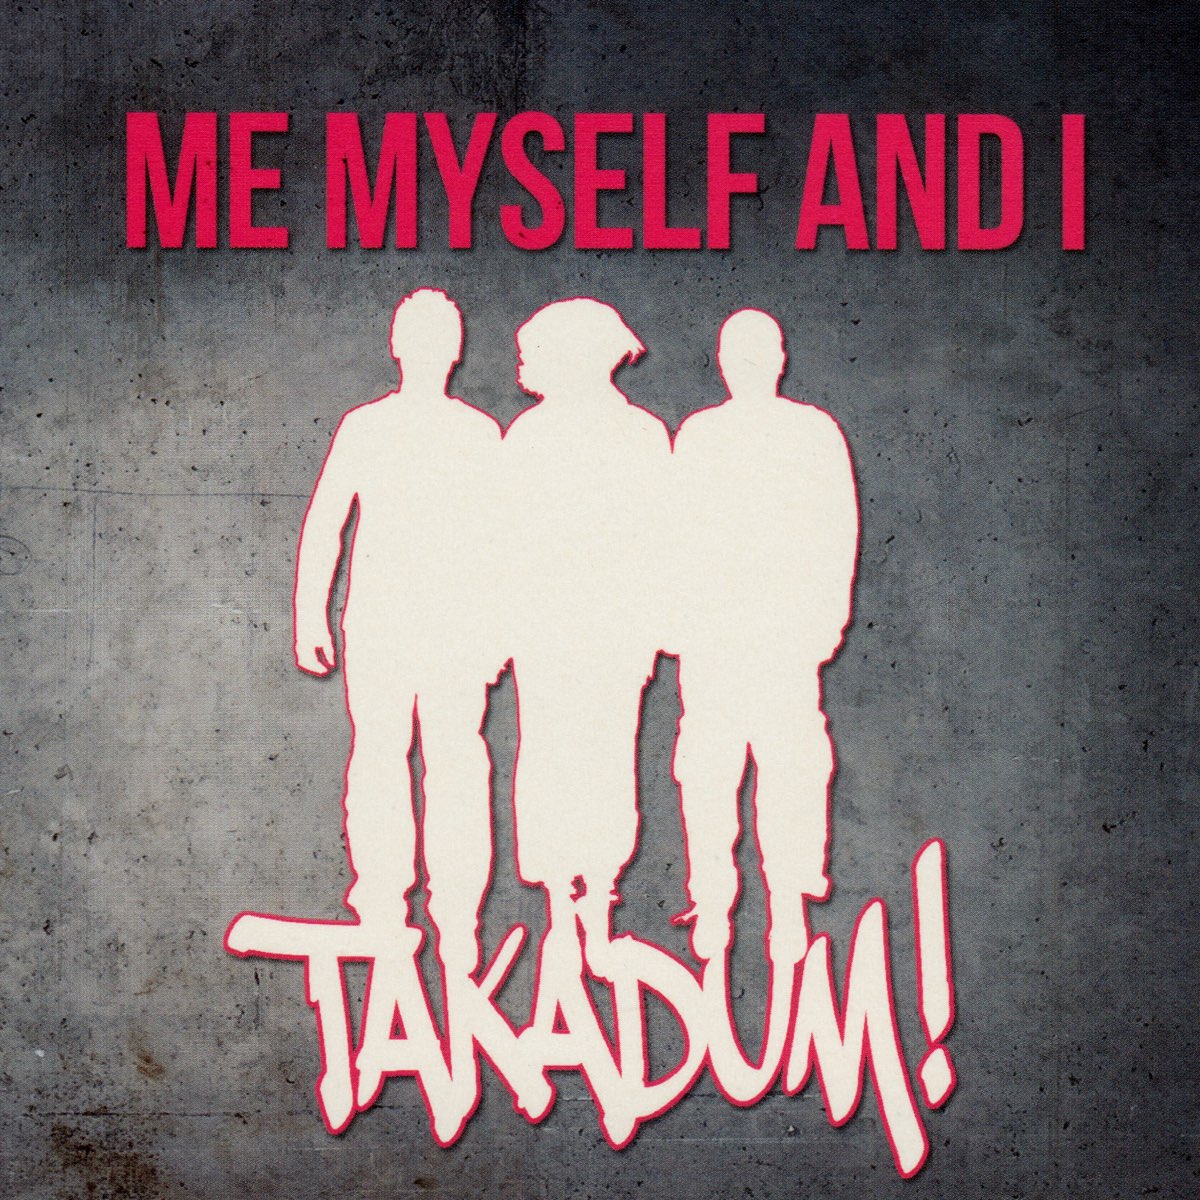 I myself. Me myself and i. Takadum. Takadum mp3. Men myself